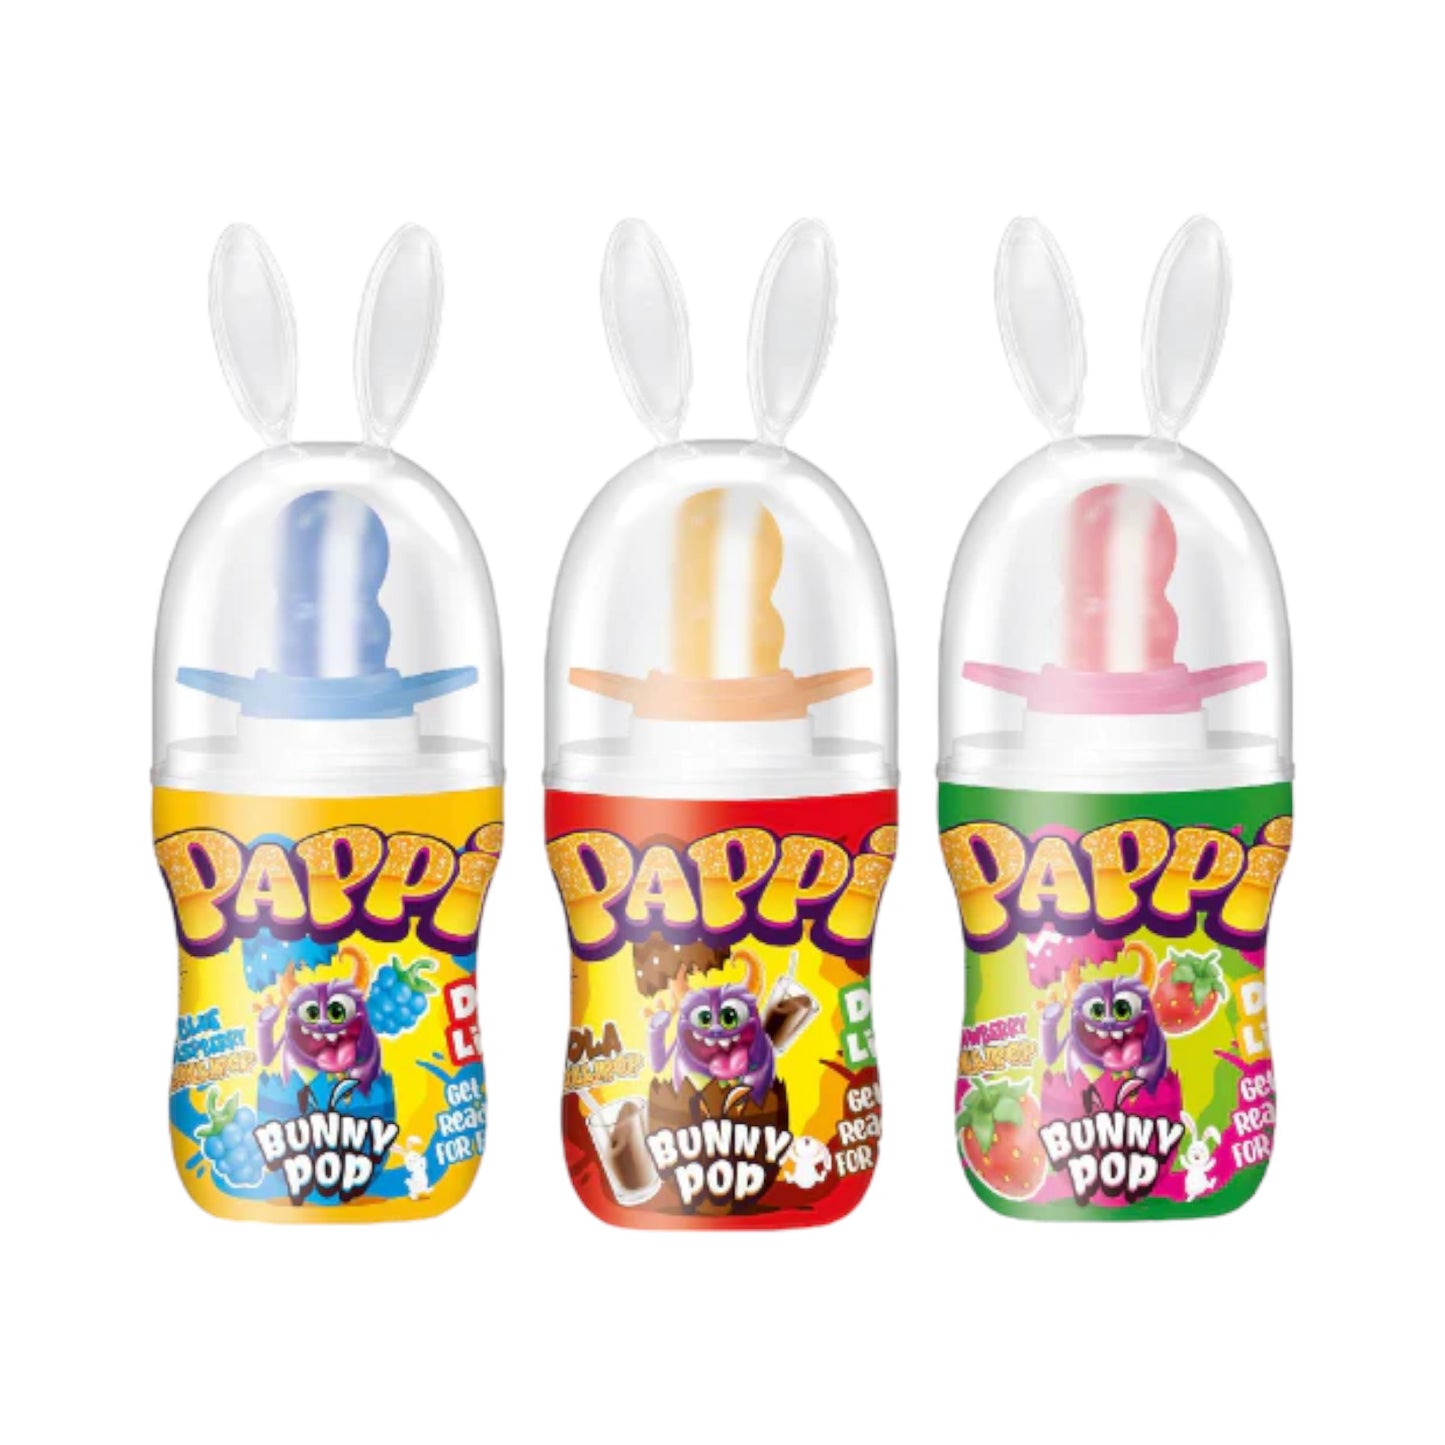 Pappi Bunny Pop - 32g